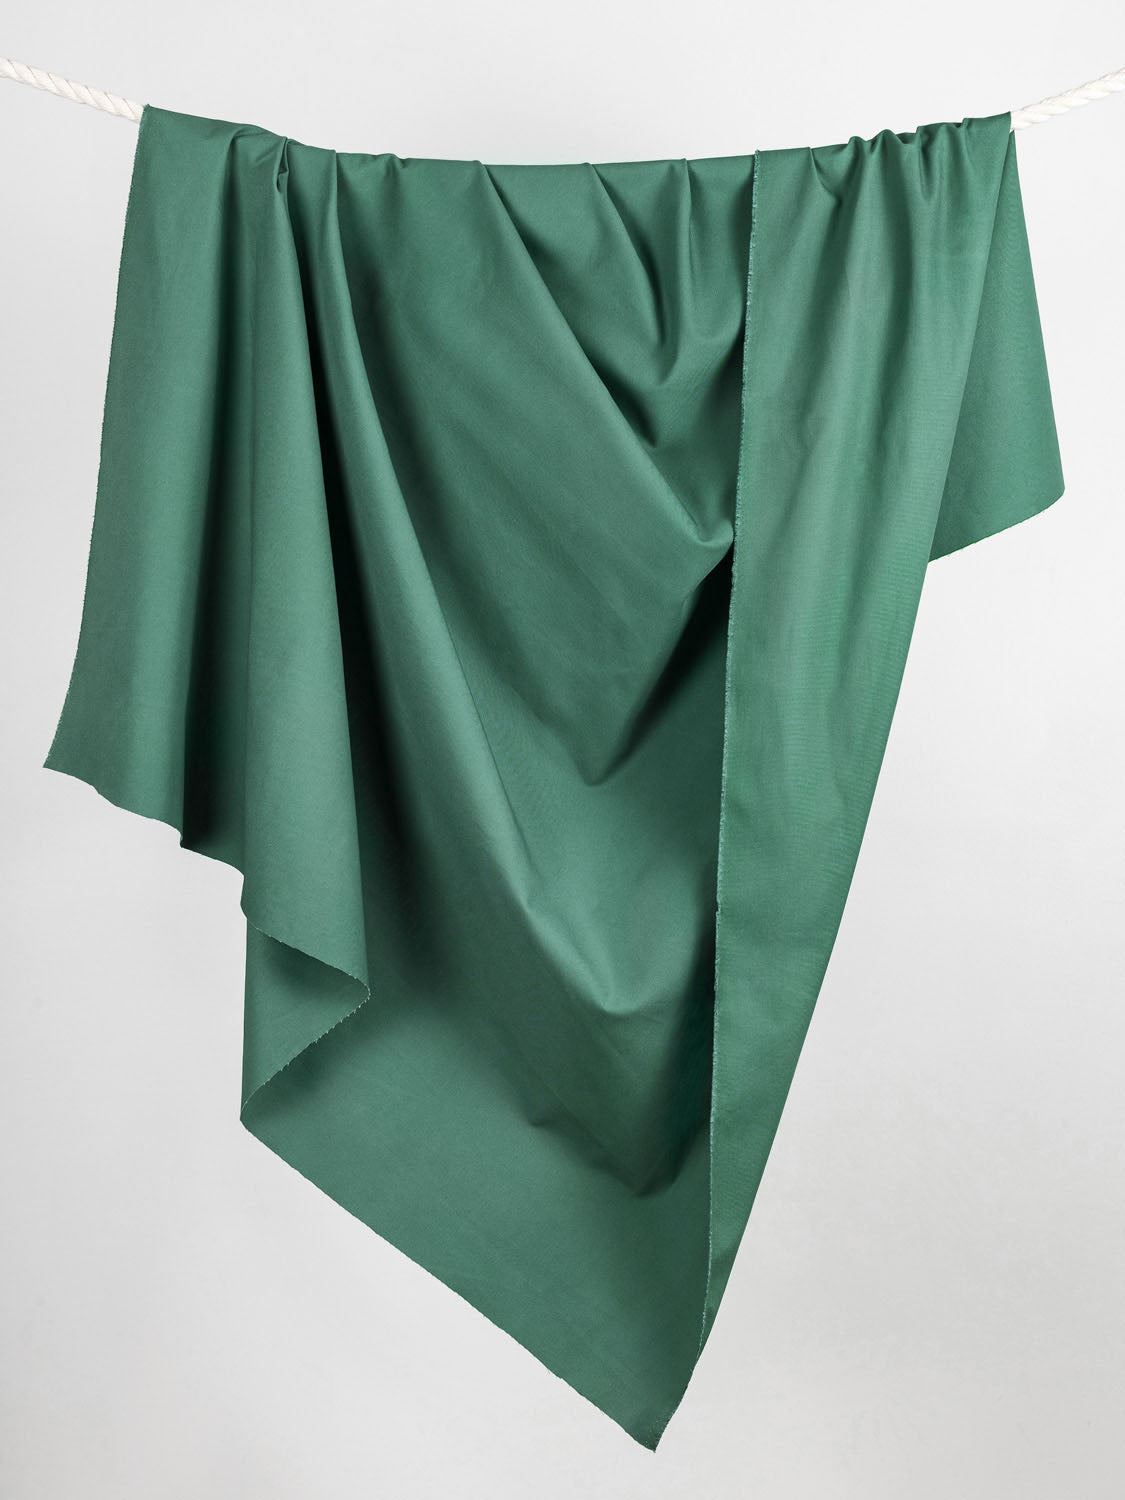 Midweight Core Collection Organic Cotton Canvas - Mallard Green | Core Fabrics